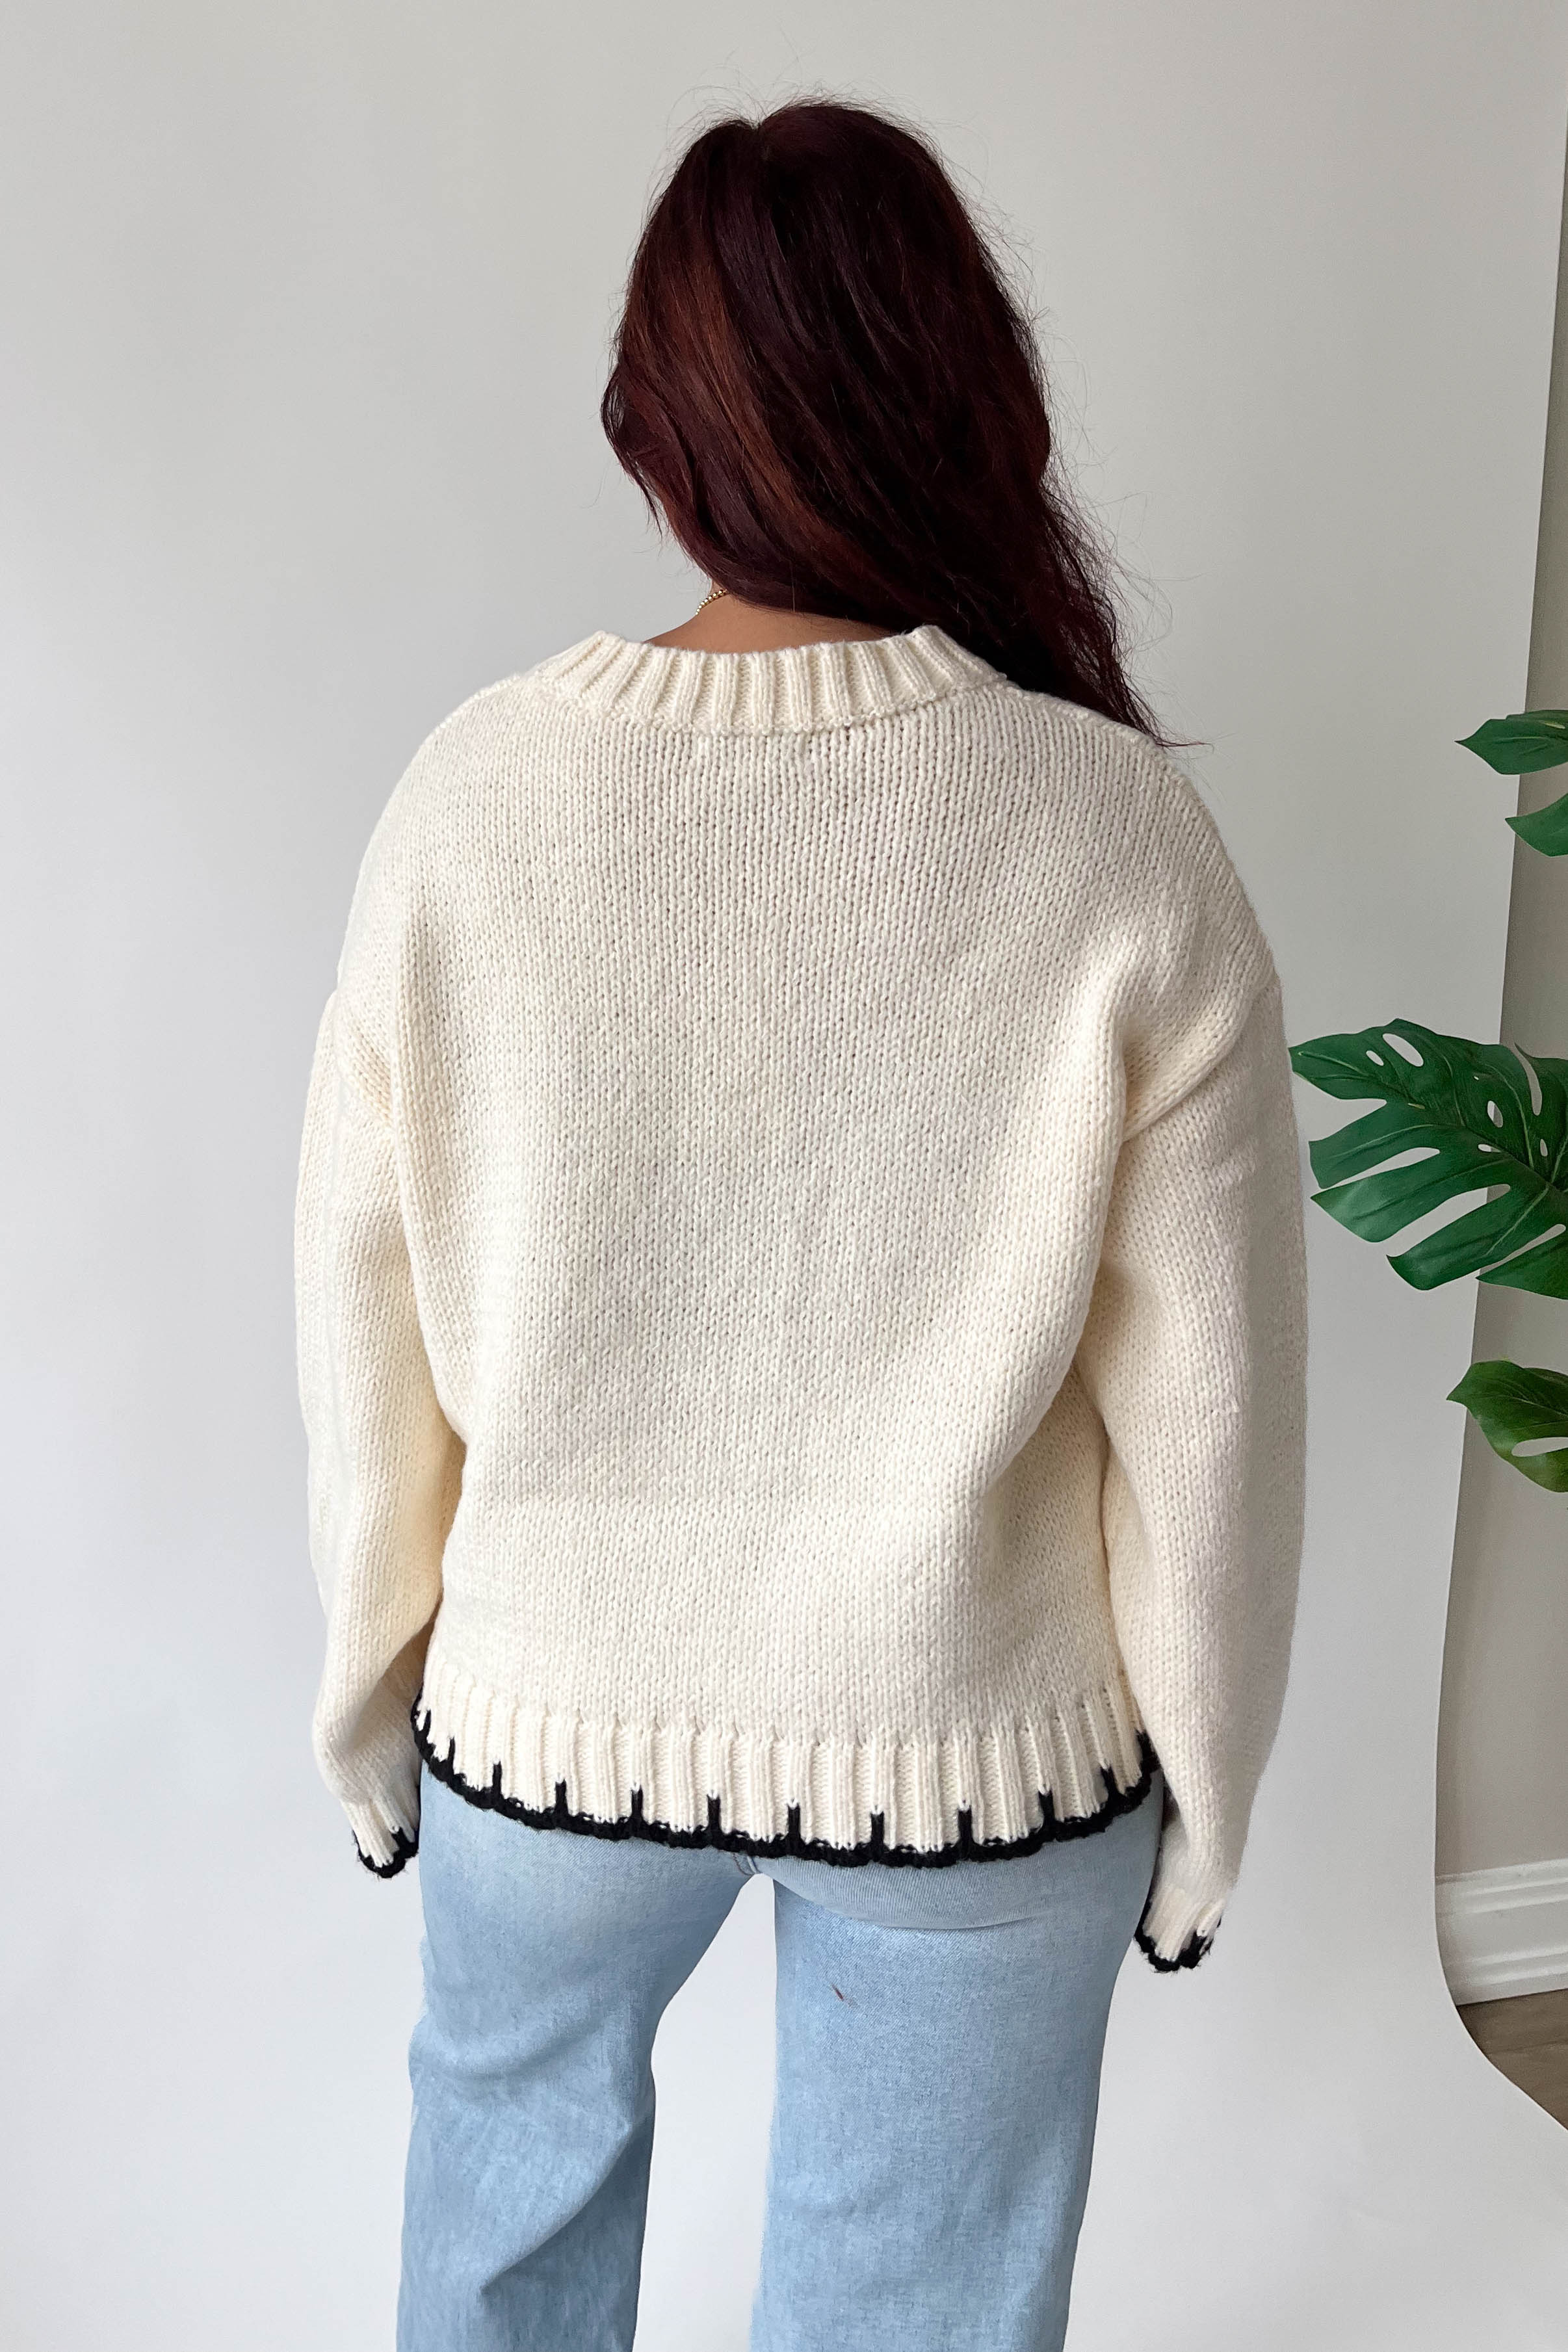 Jade Sweater